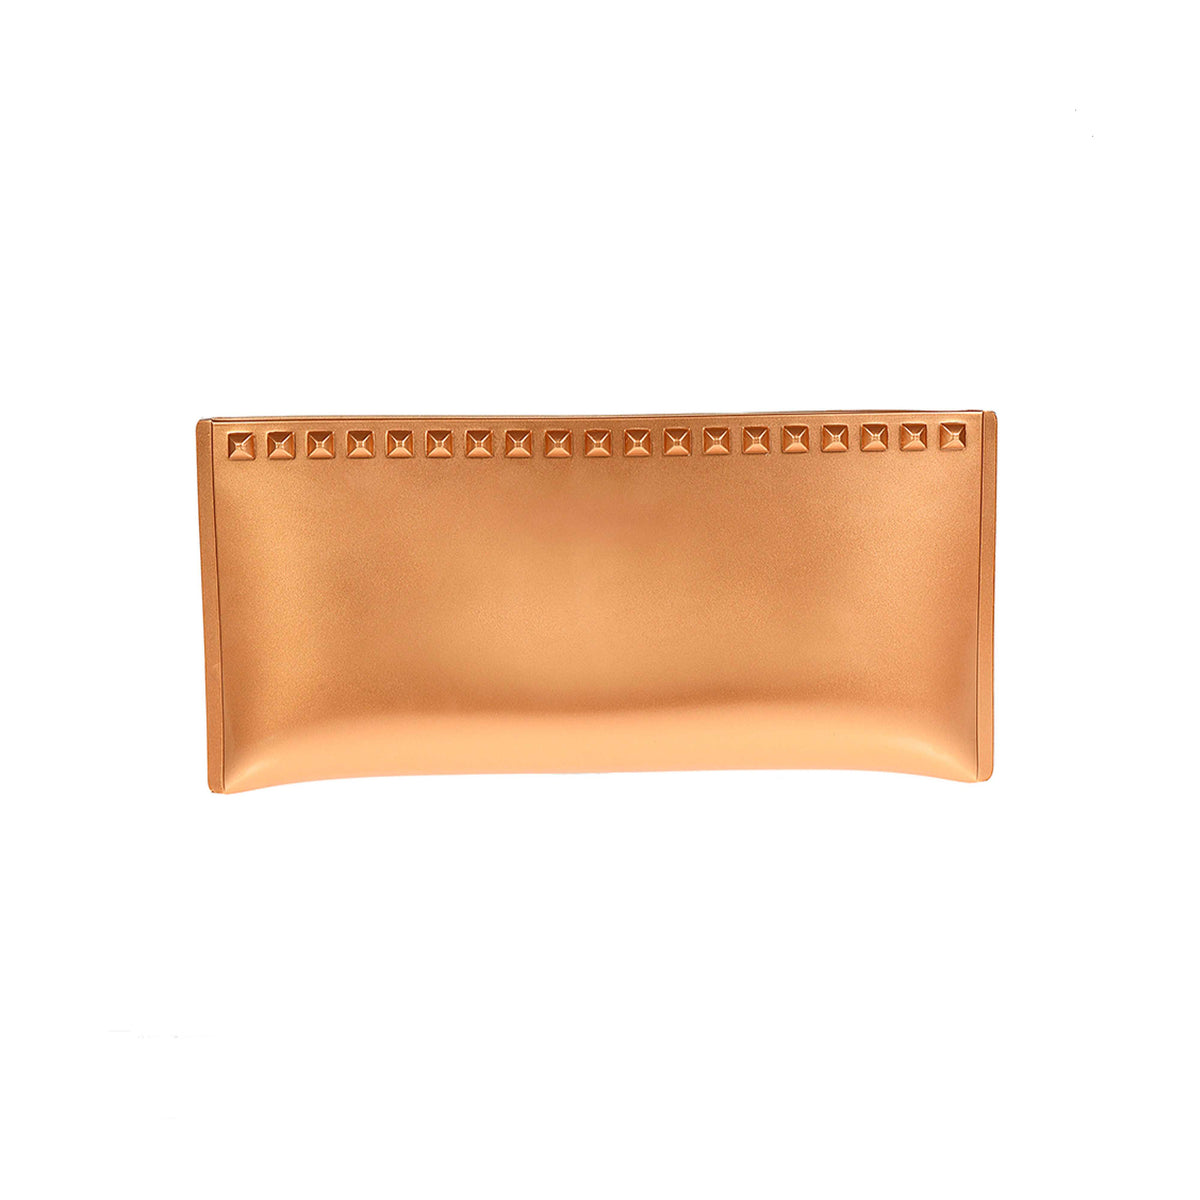 Julian metallic studded purse in color rose gold